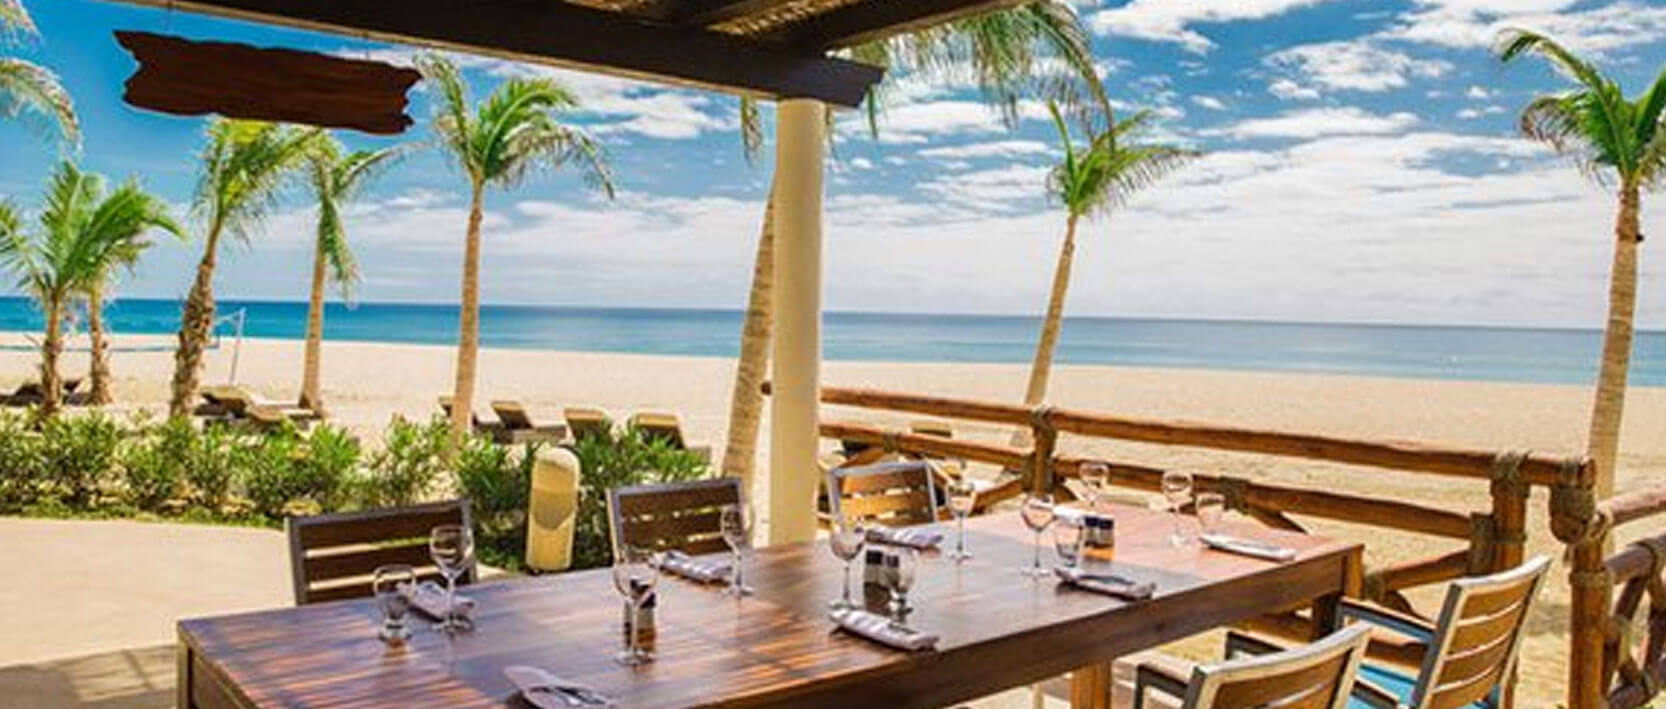 Hyatt Ziva Los Cabos Restaurants and Bars - La Hacienda Beach Grill